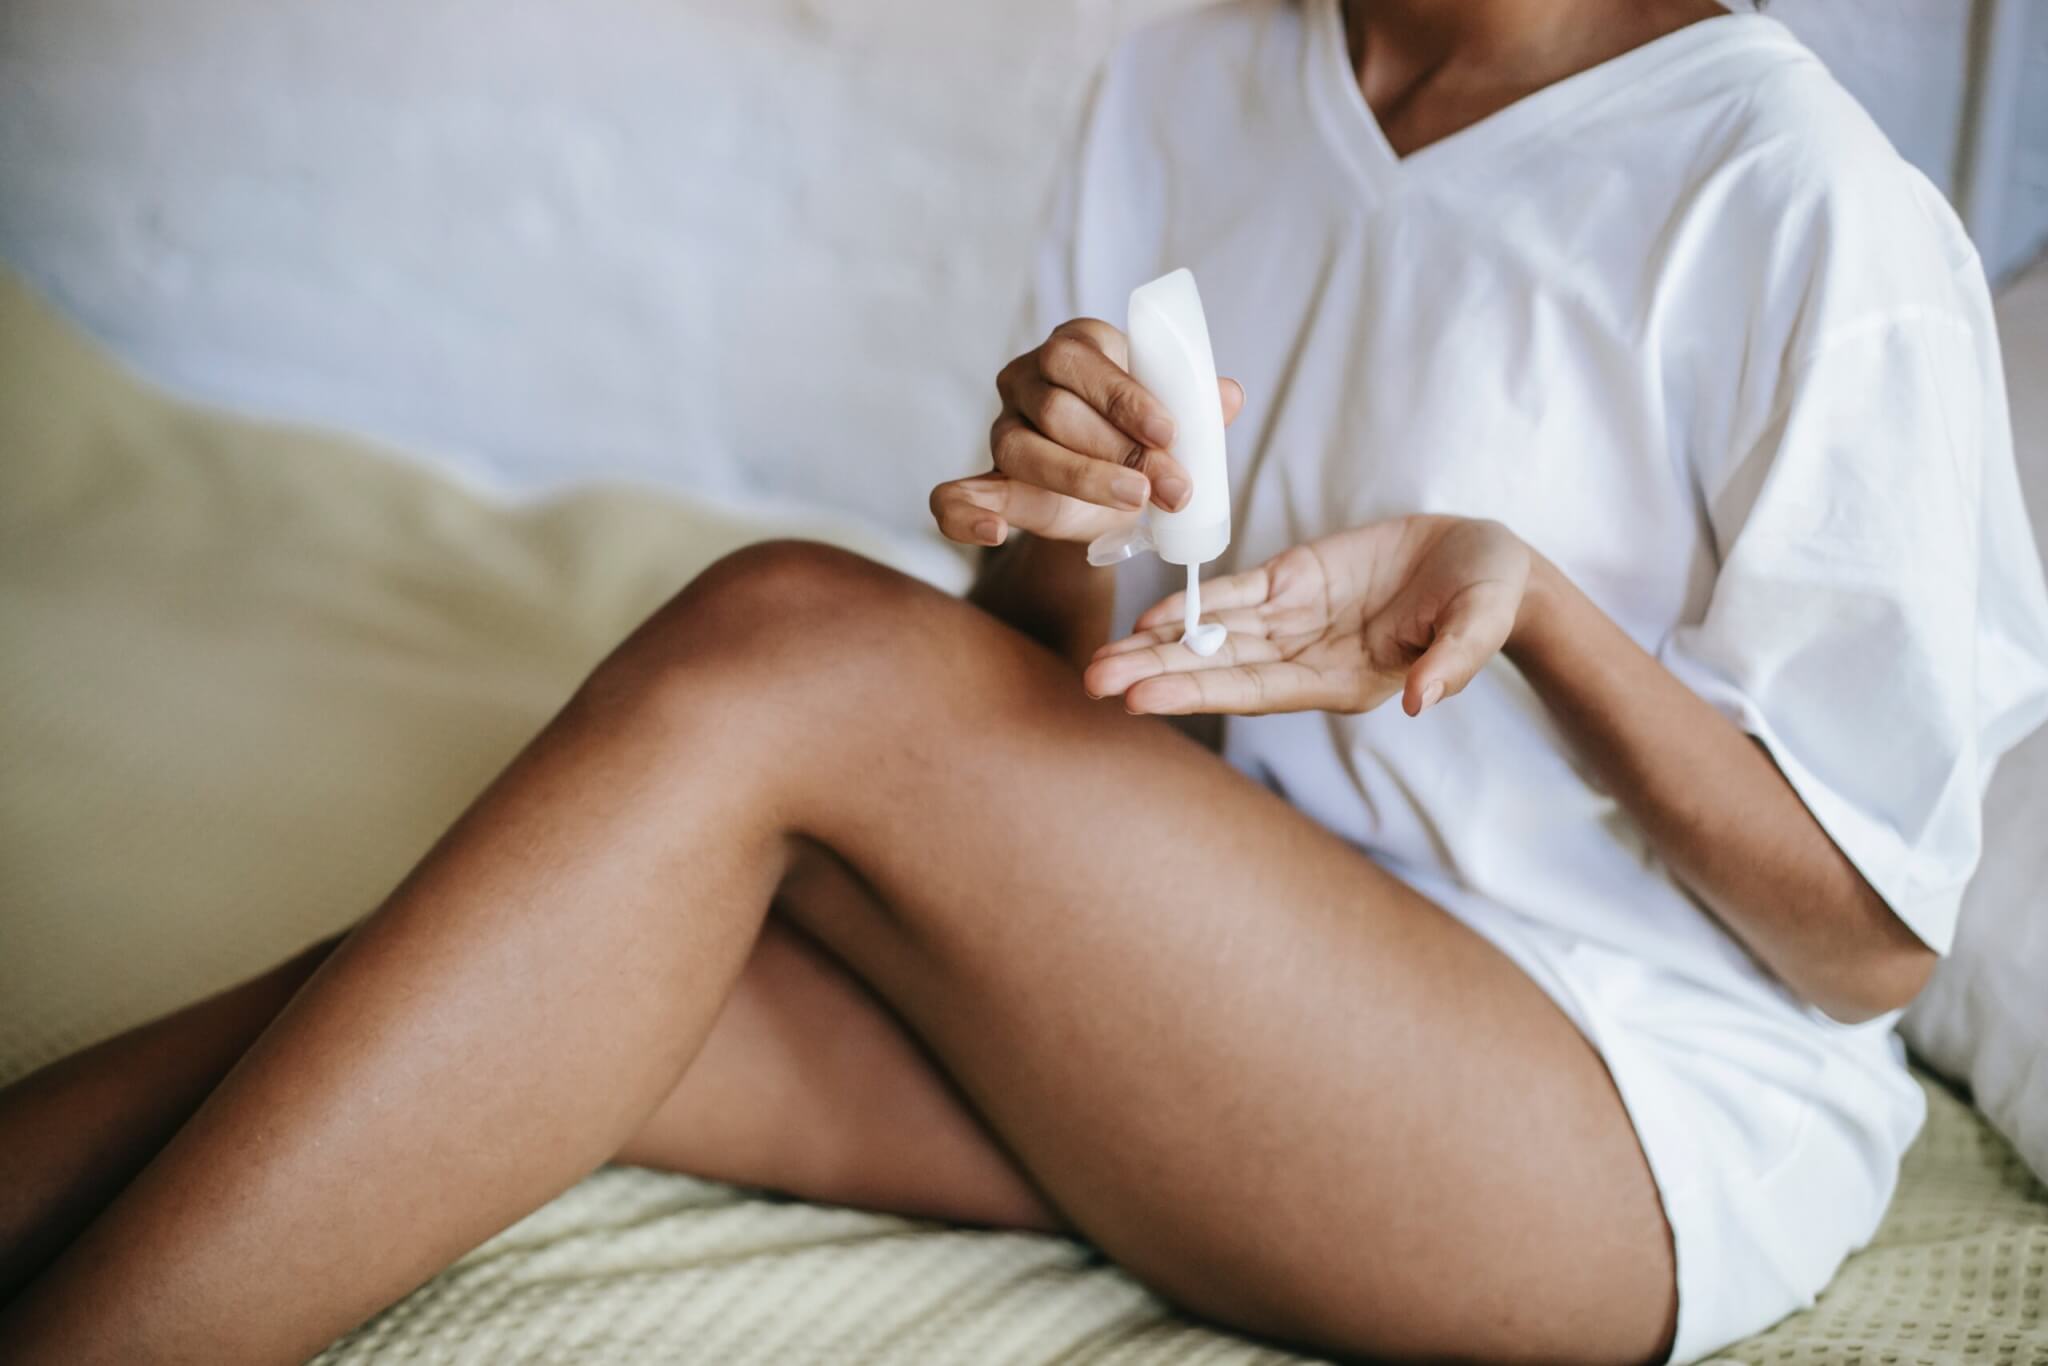 Woman rubbing body lotion on her legs